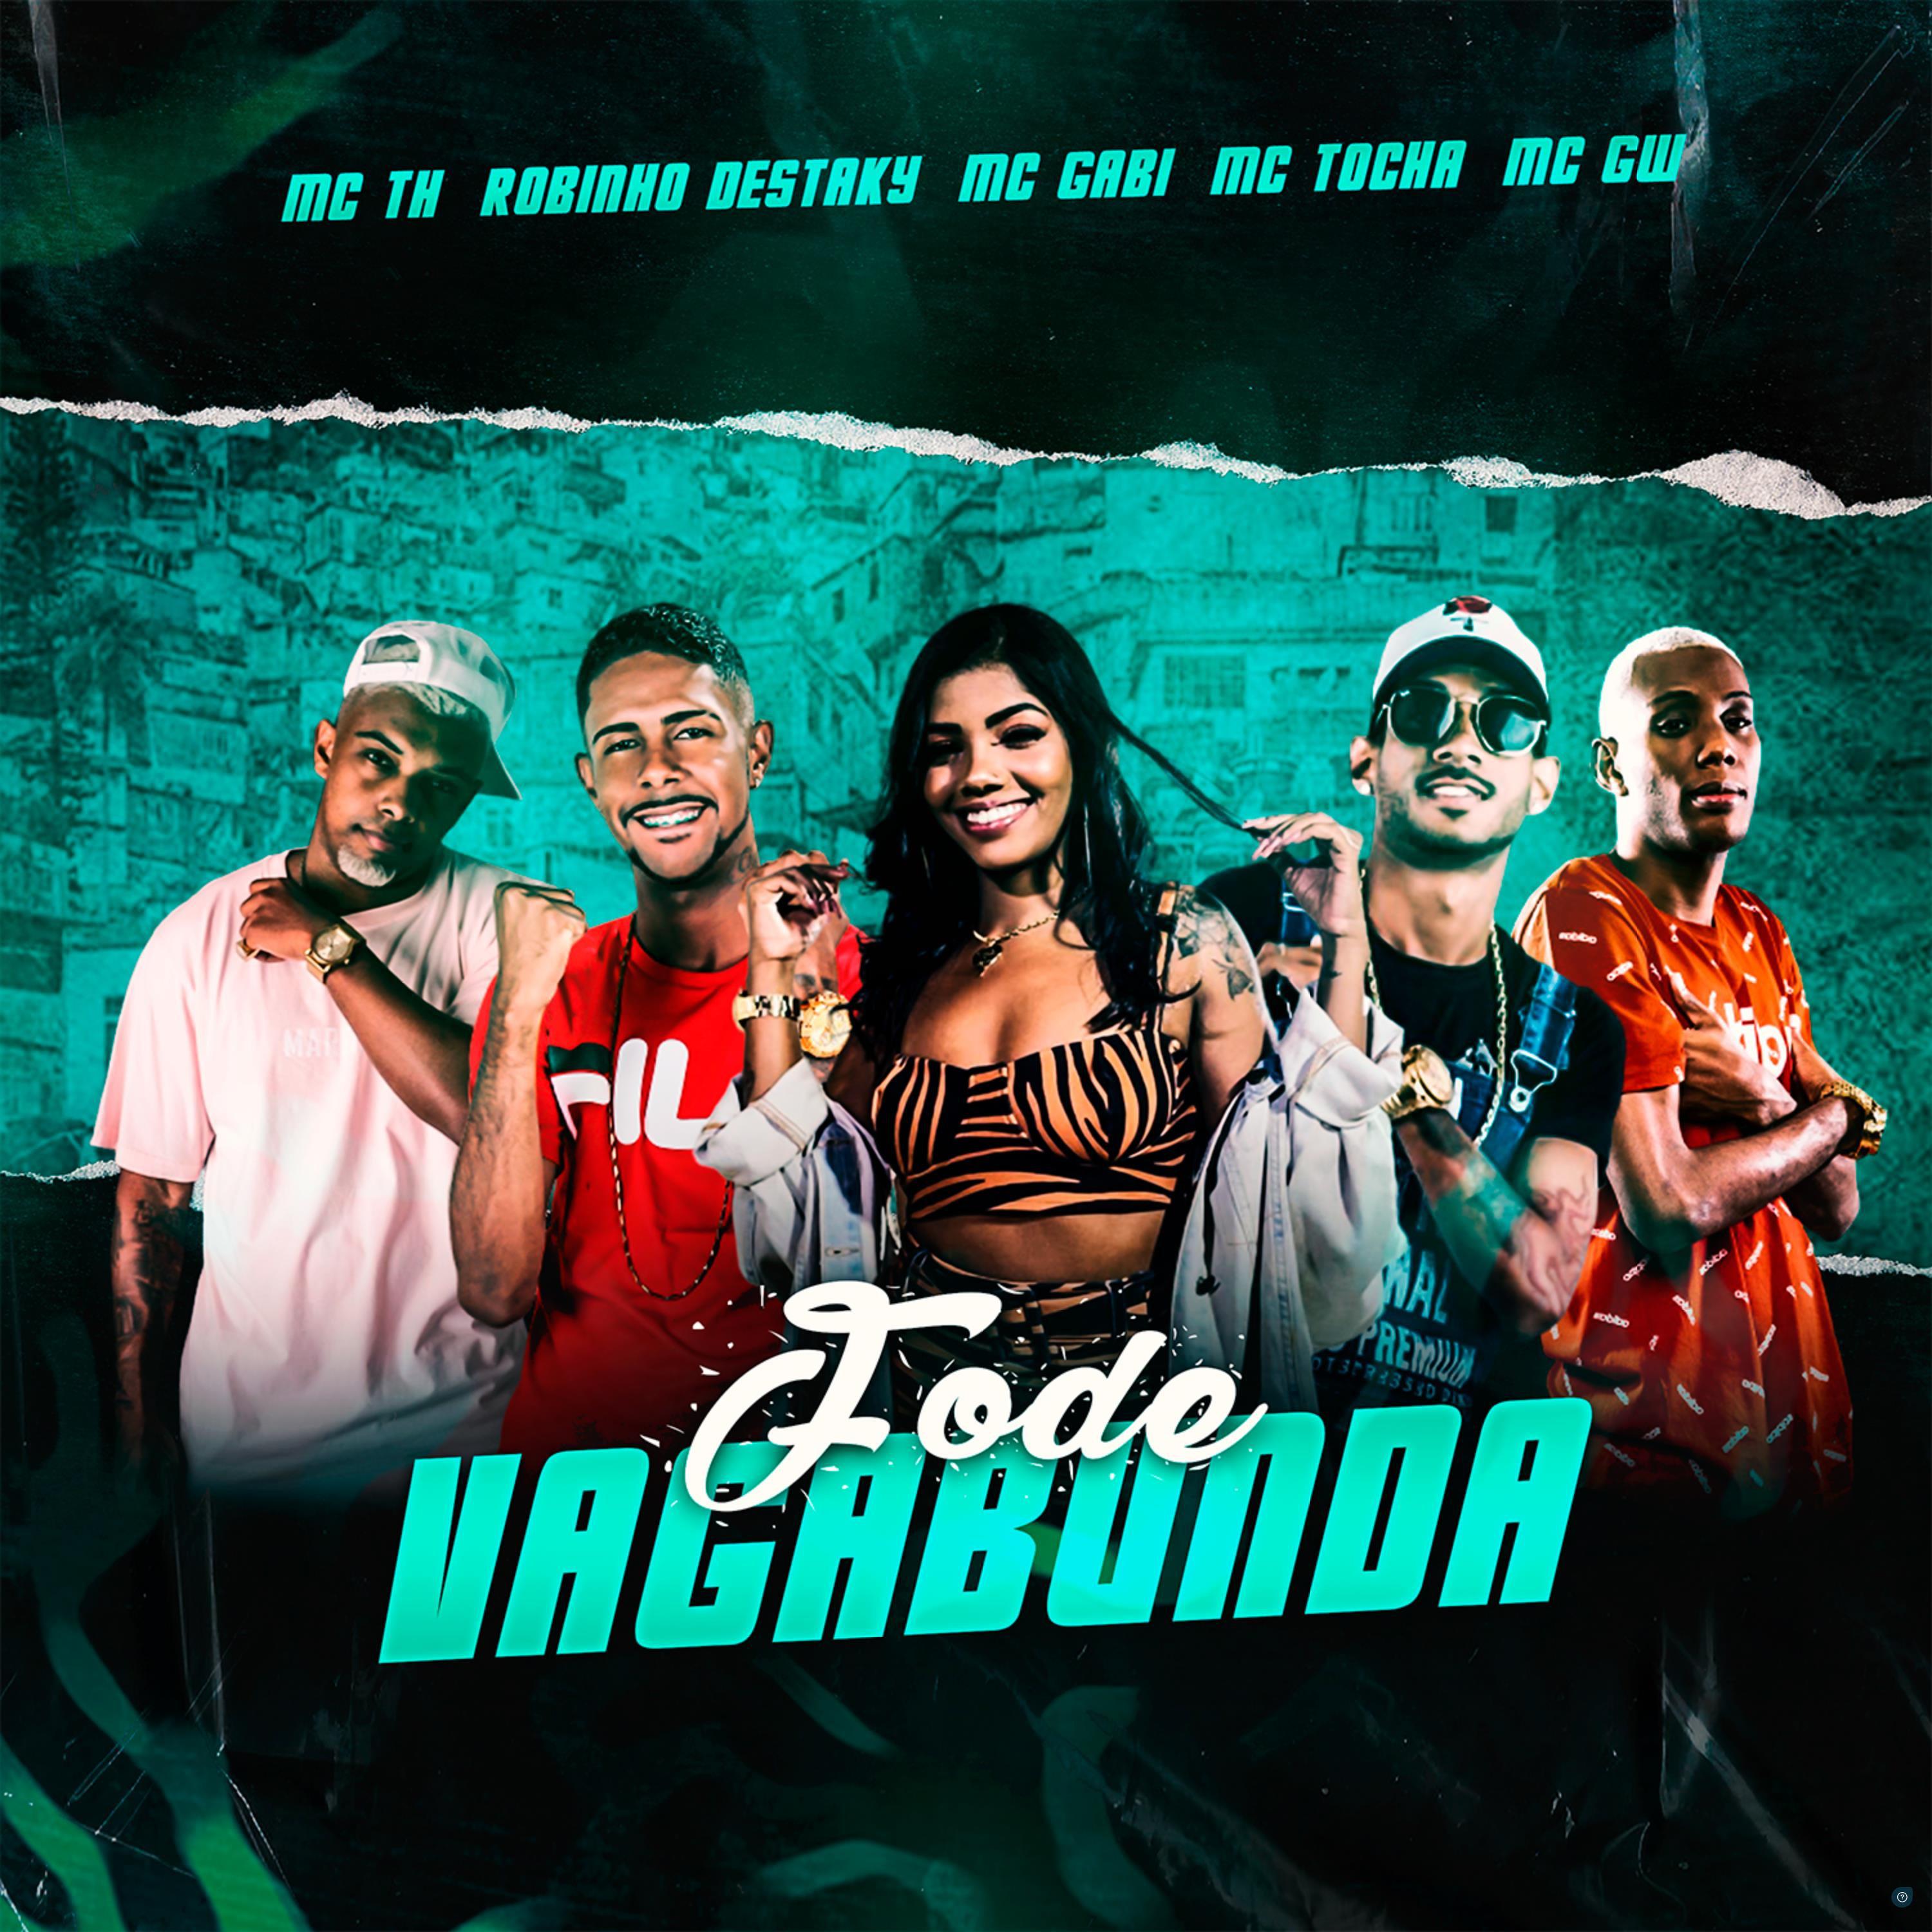 Robinho Destaky - Fode Vagabunda (feat. Mc Th, MC Gabi & MC GW)